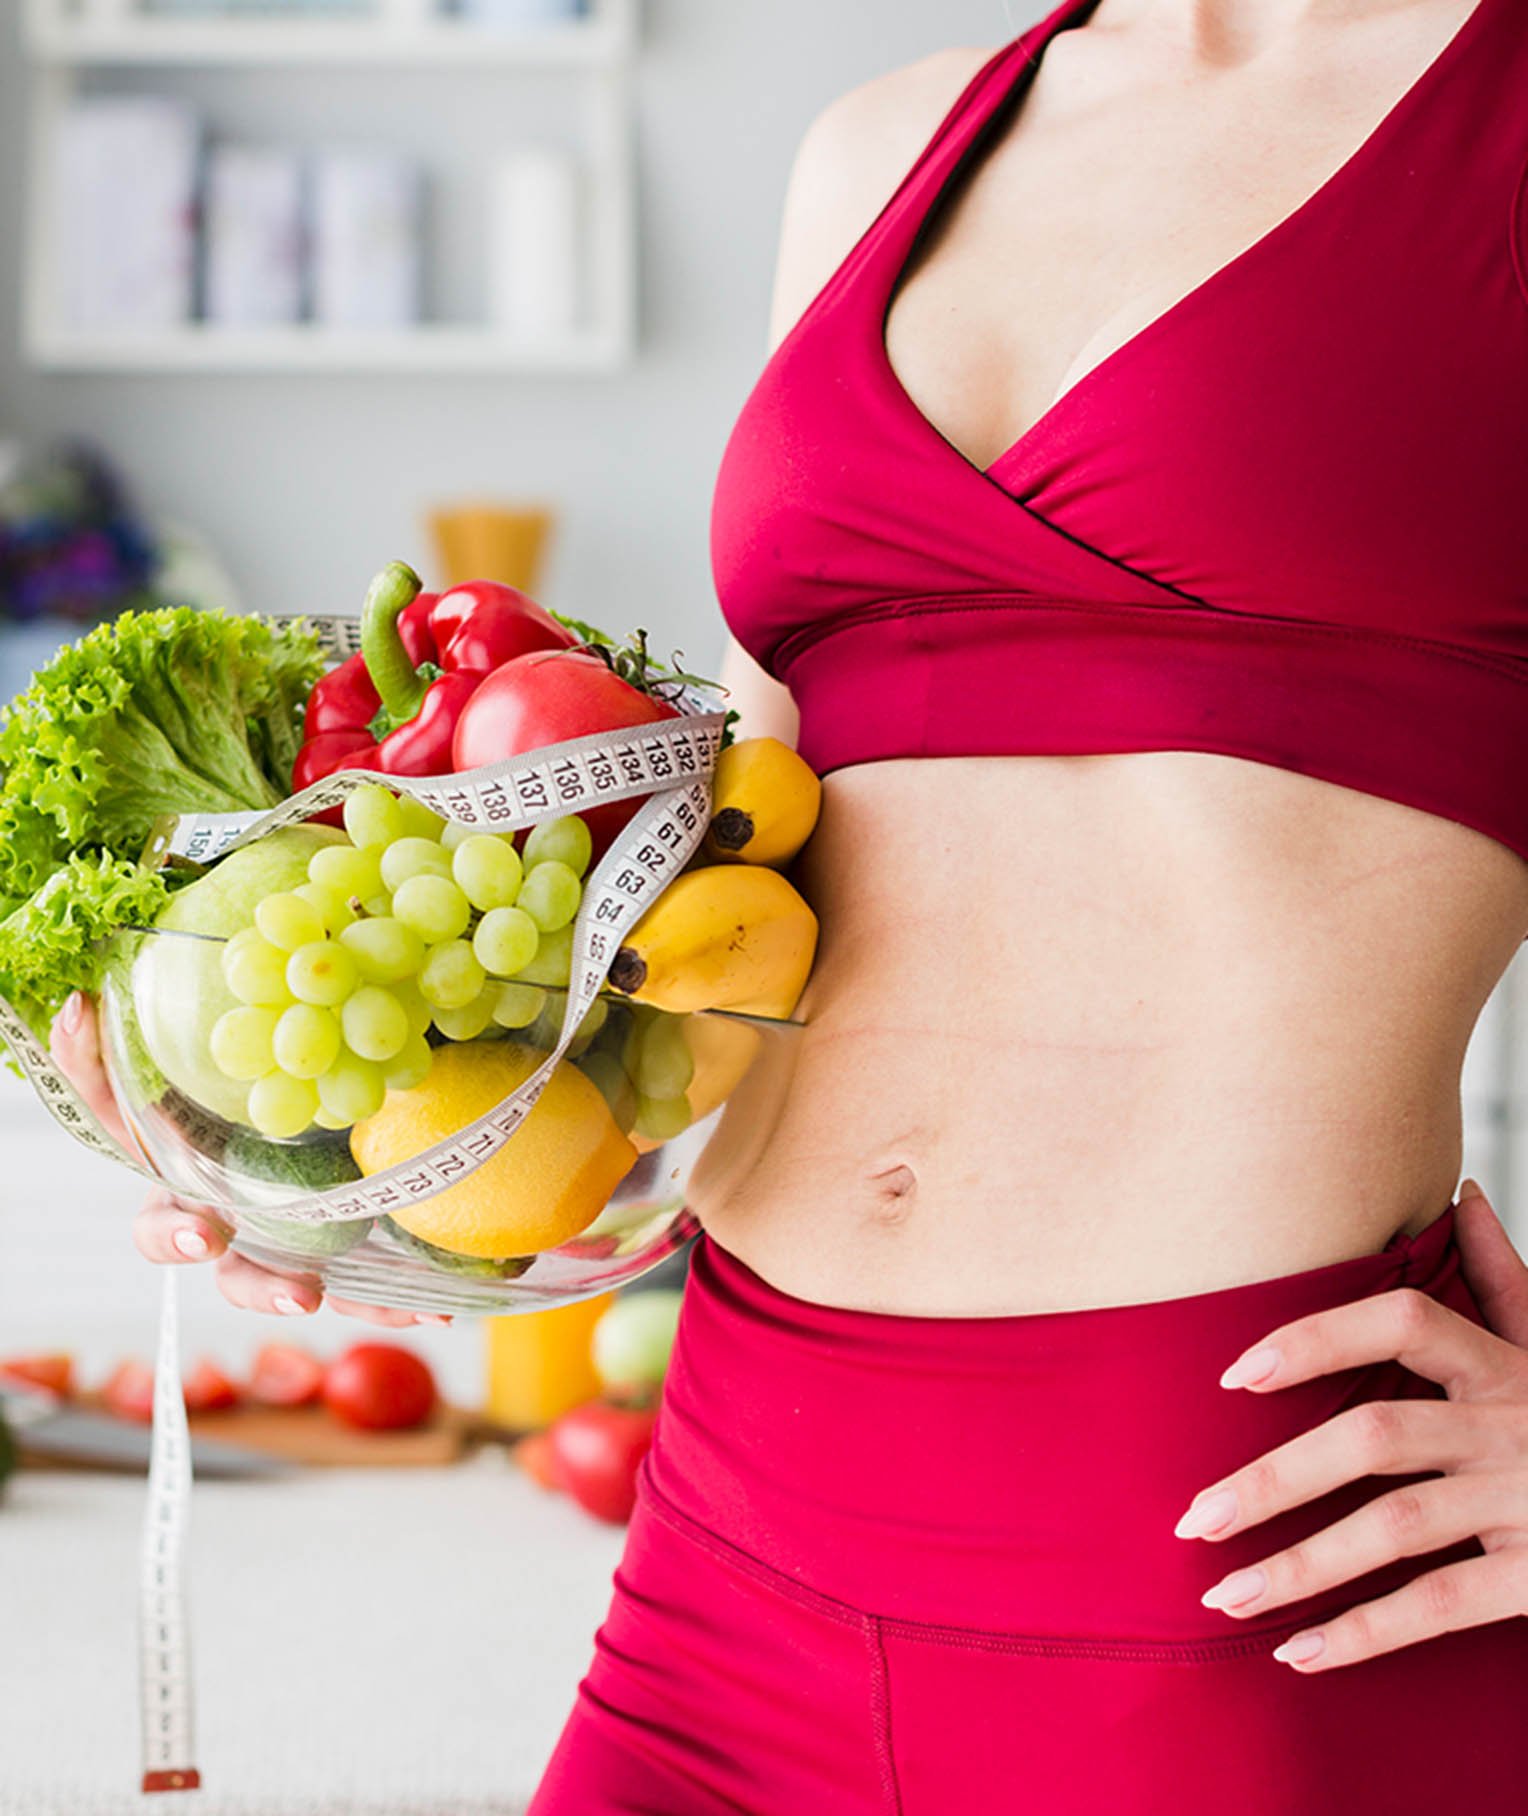 15 Vegan Diet Foods to Eat for Normalizing Metabolism